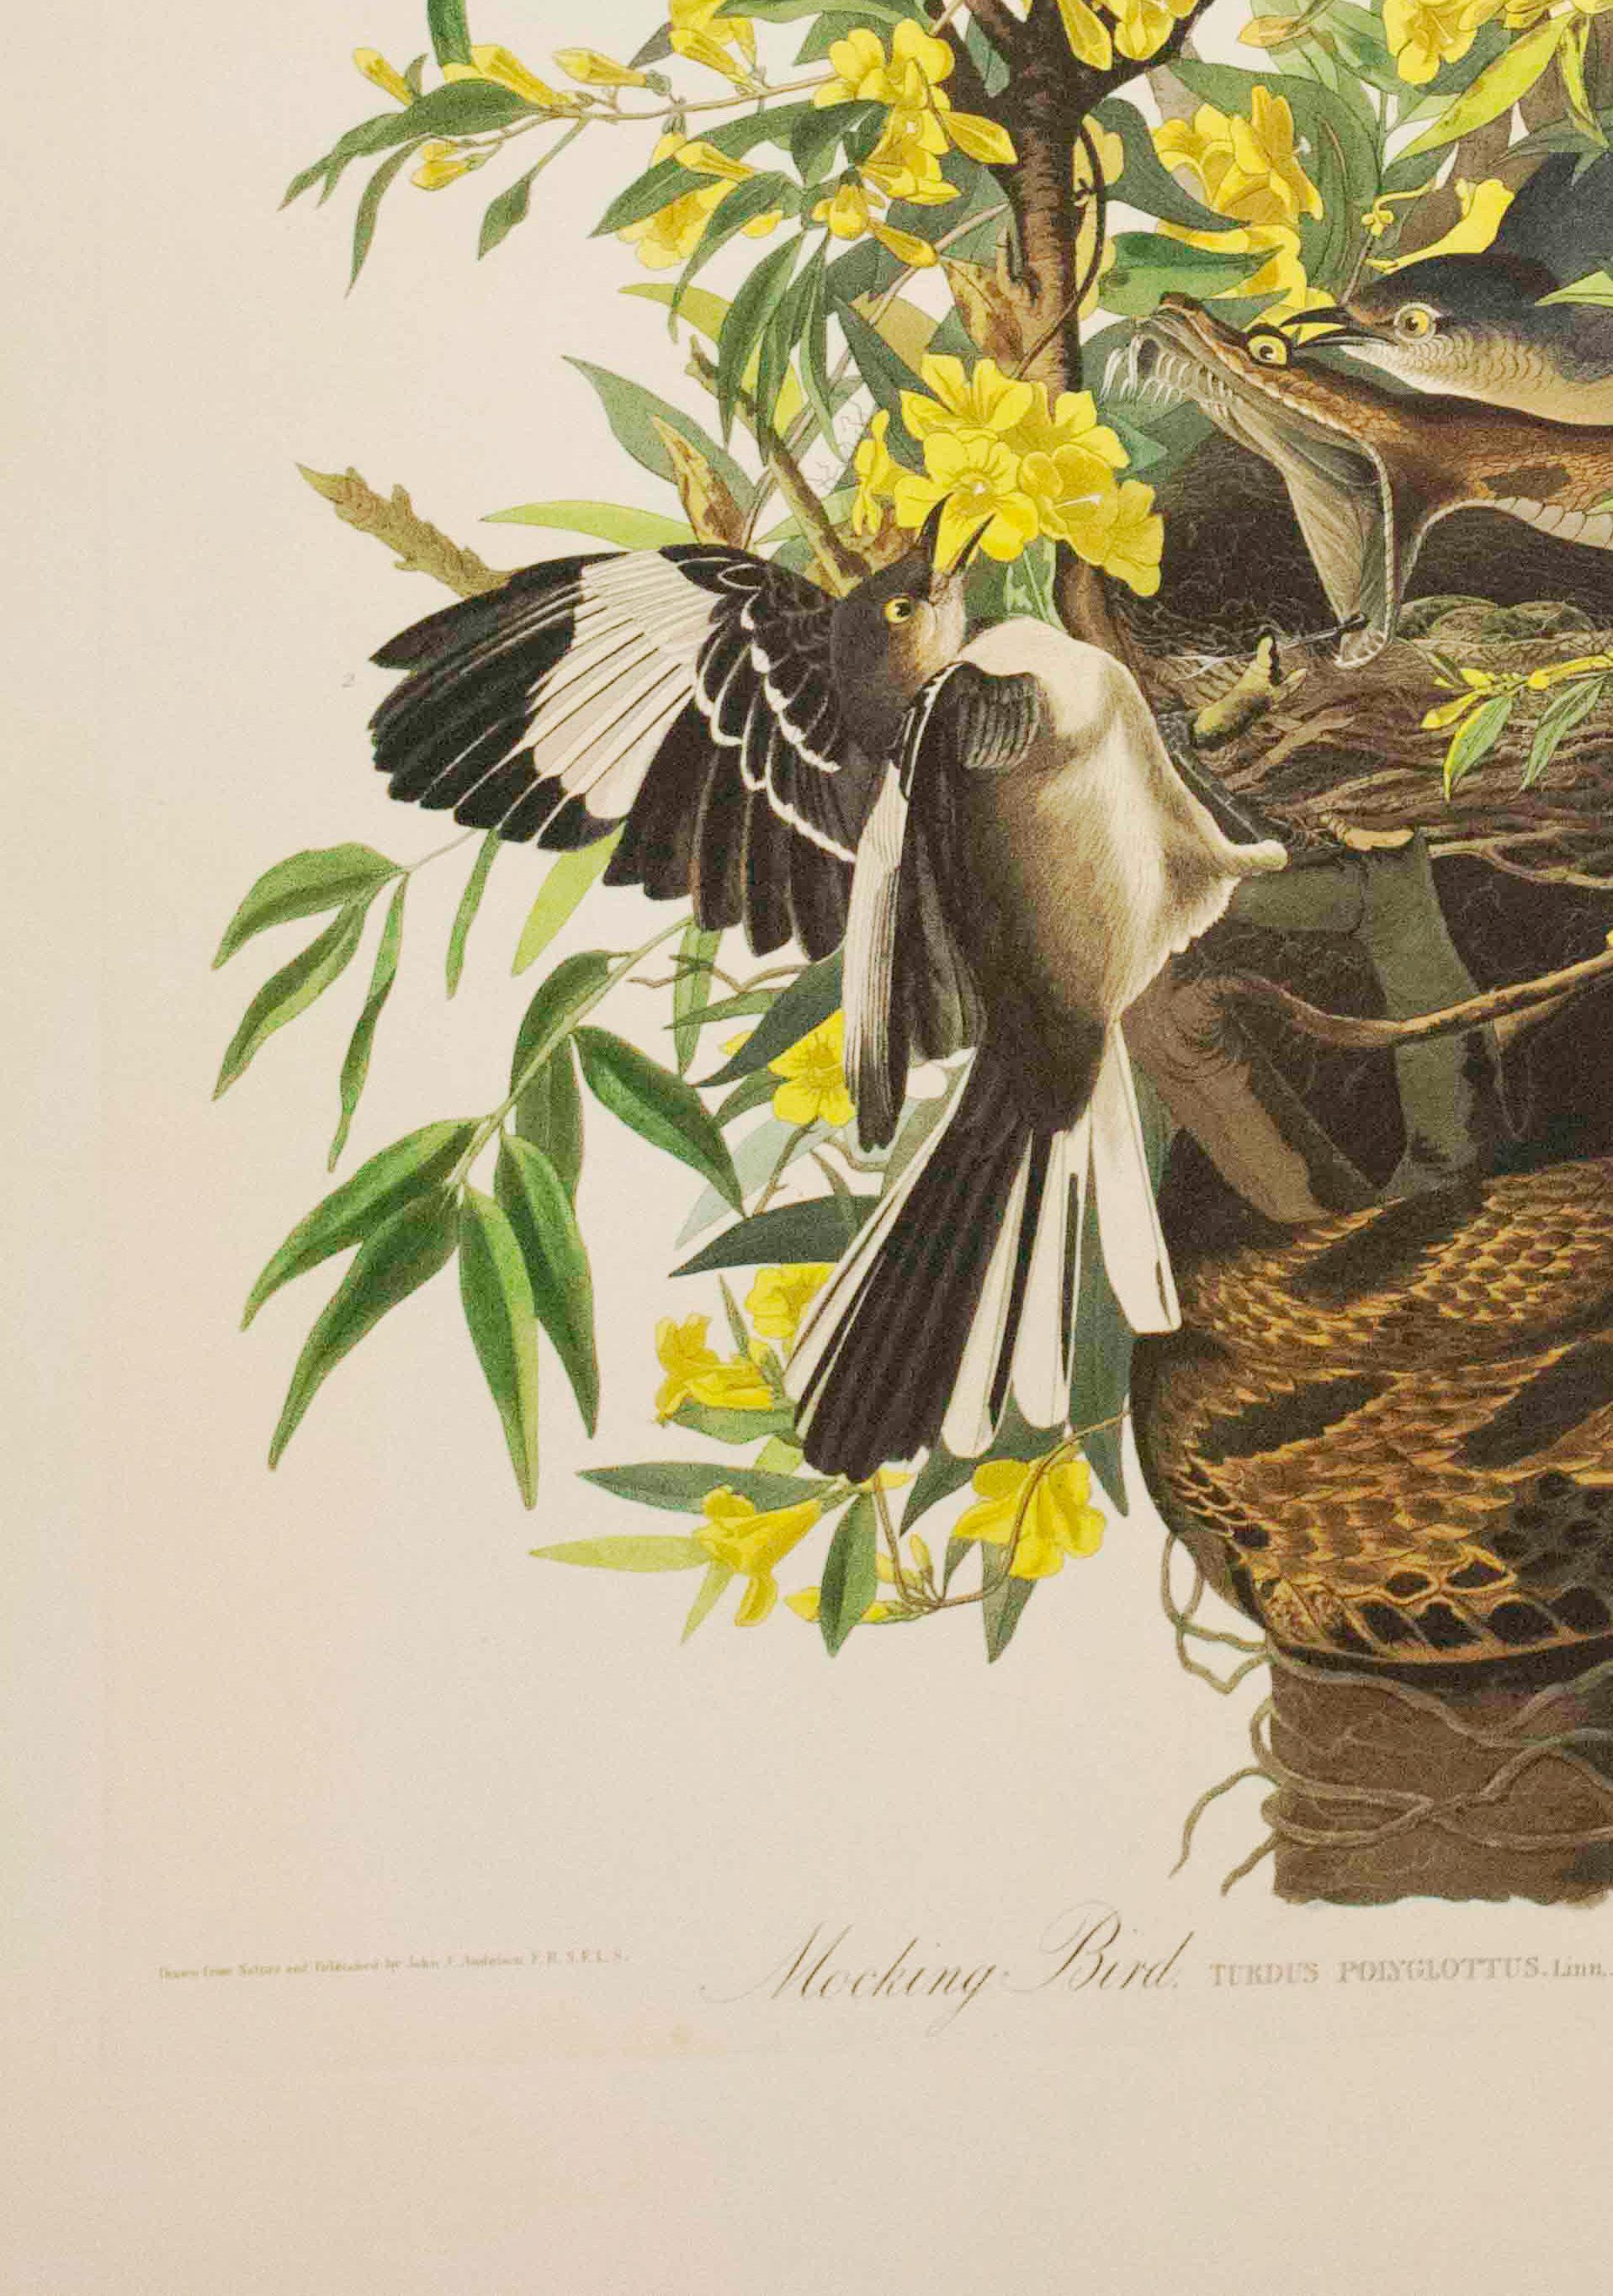 Mocking Bird, Édition Pl. 21 - Beige Print par After John James Audubon